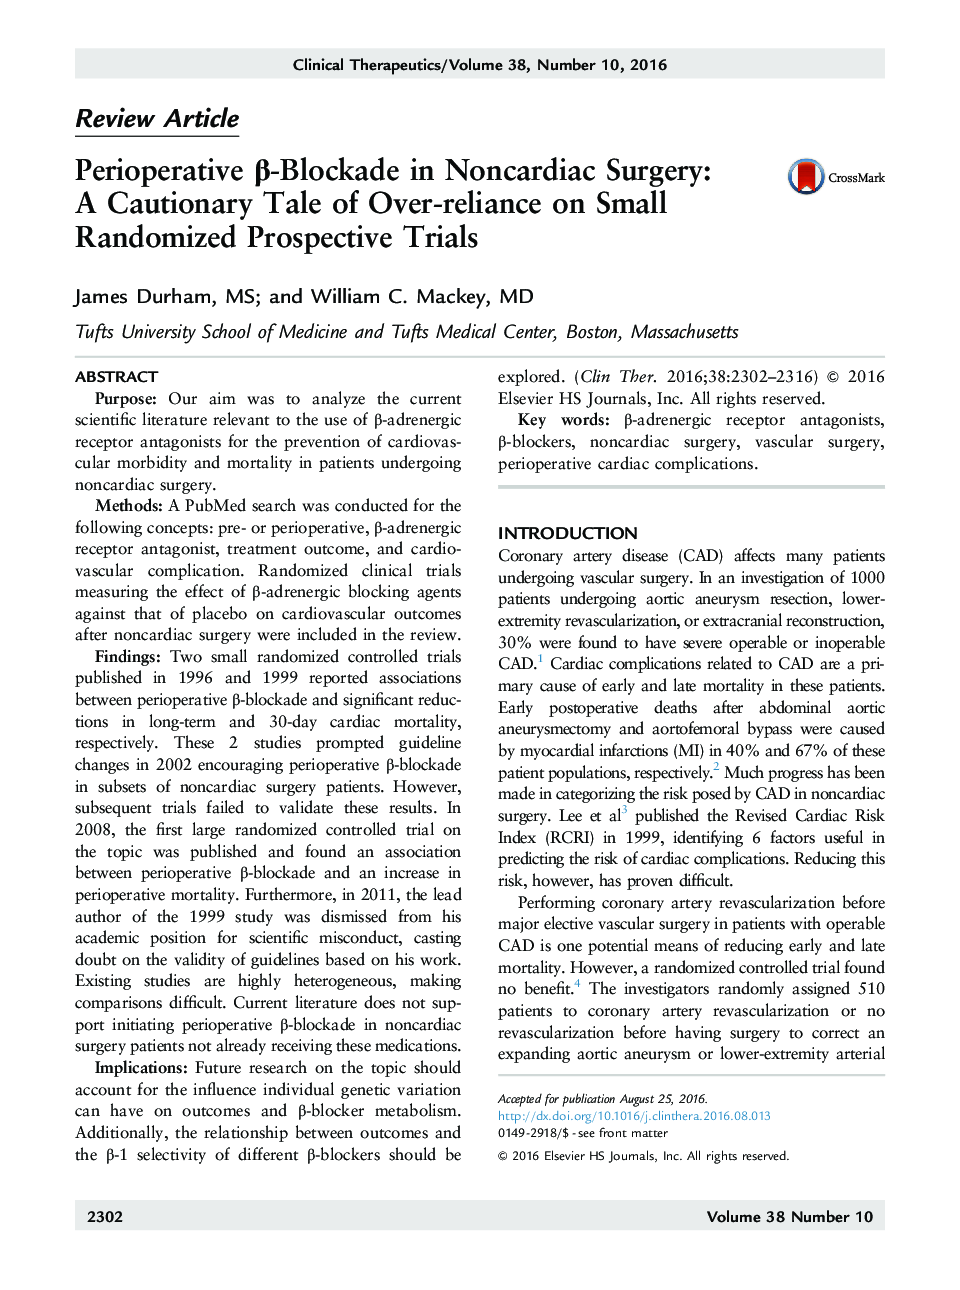 Perioperative Î²-Blockade in Noncardiac Surgery: A Cautionary Tale of Over-reliance on Small Randomized Prospective Trials